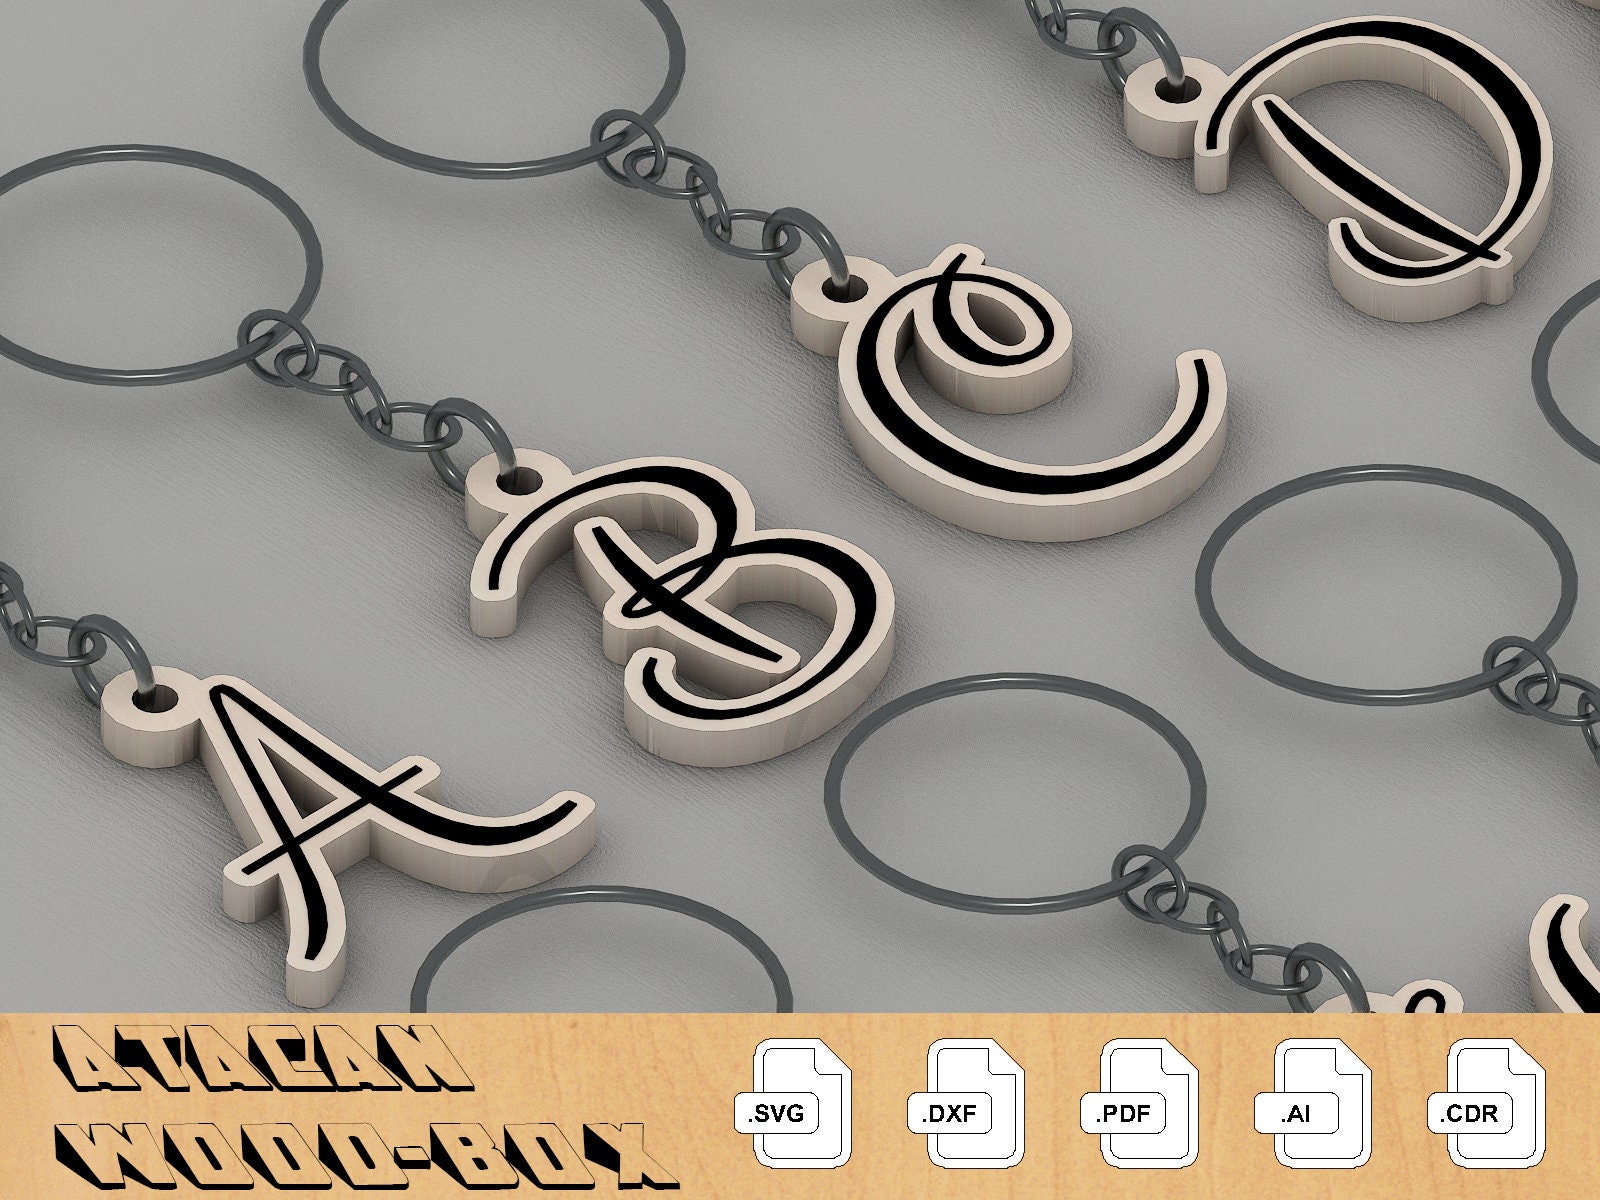 Sarray's Creations Alphabet Initial Letter Keychain Charm, Pendant Tassel  Key Ring for Purse, Handbags, Bookbags, Customizable